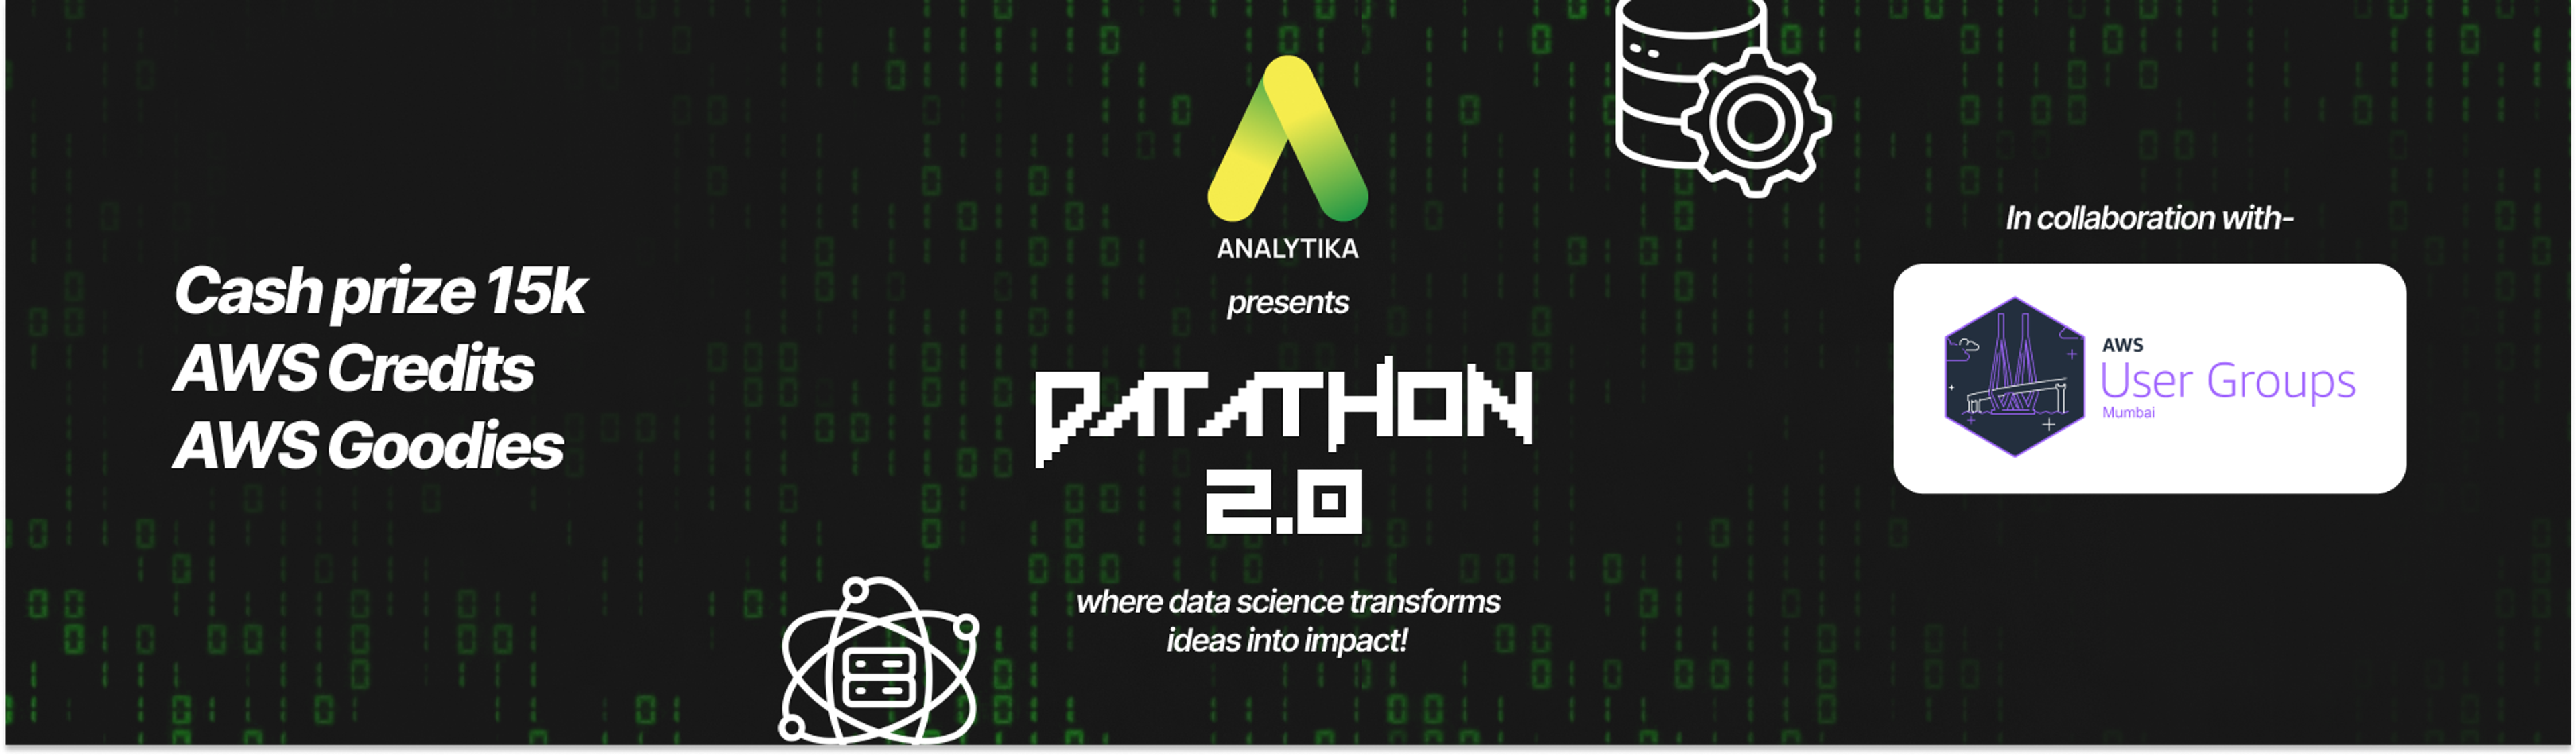 Datathon 2.0 